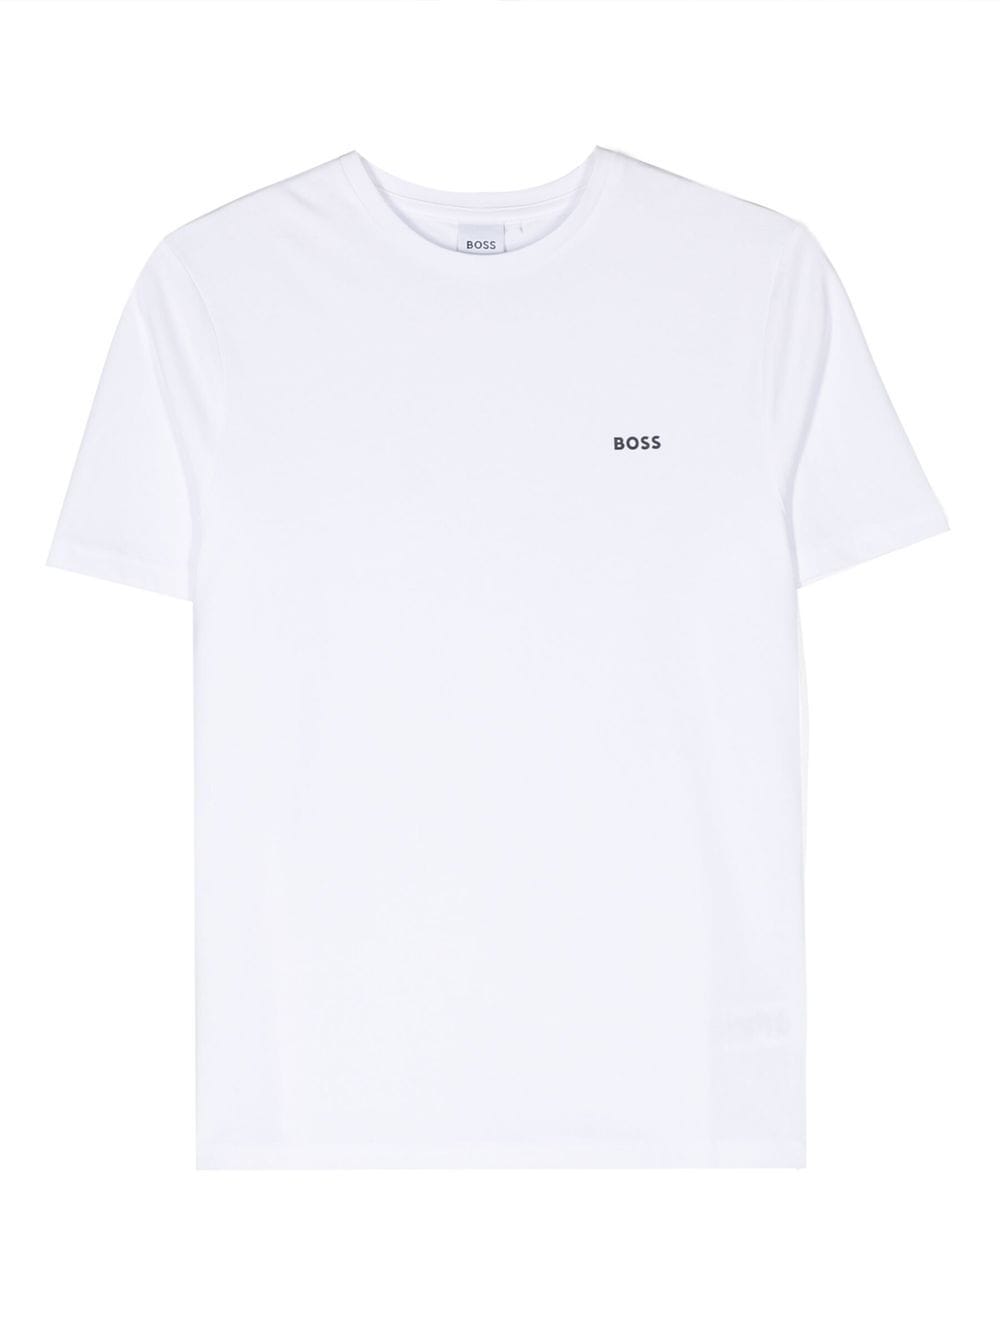 T-shirt bianca per bambino con logo piccolo